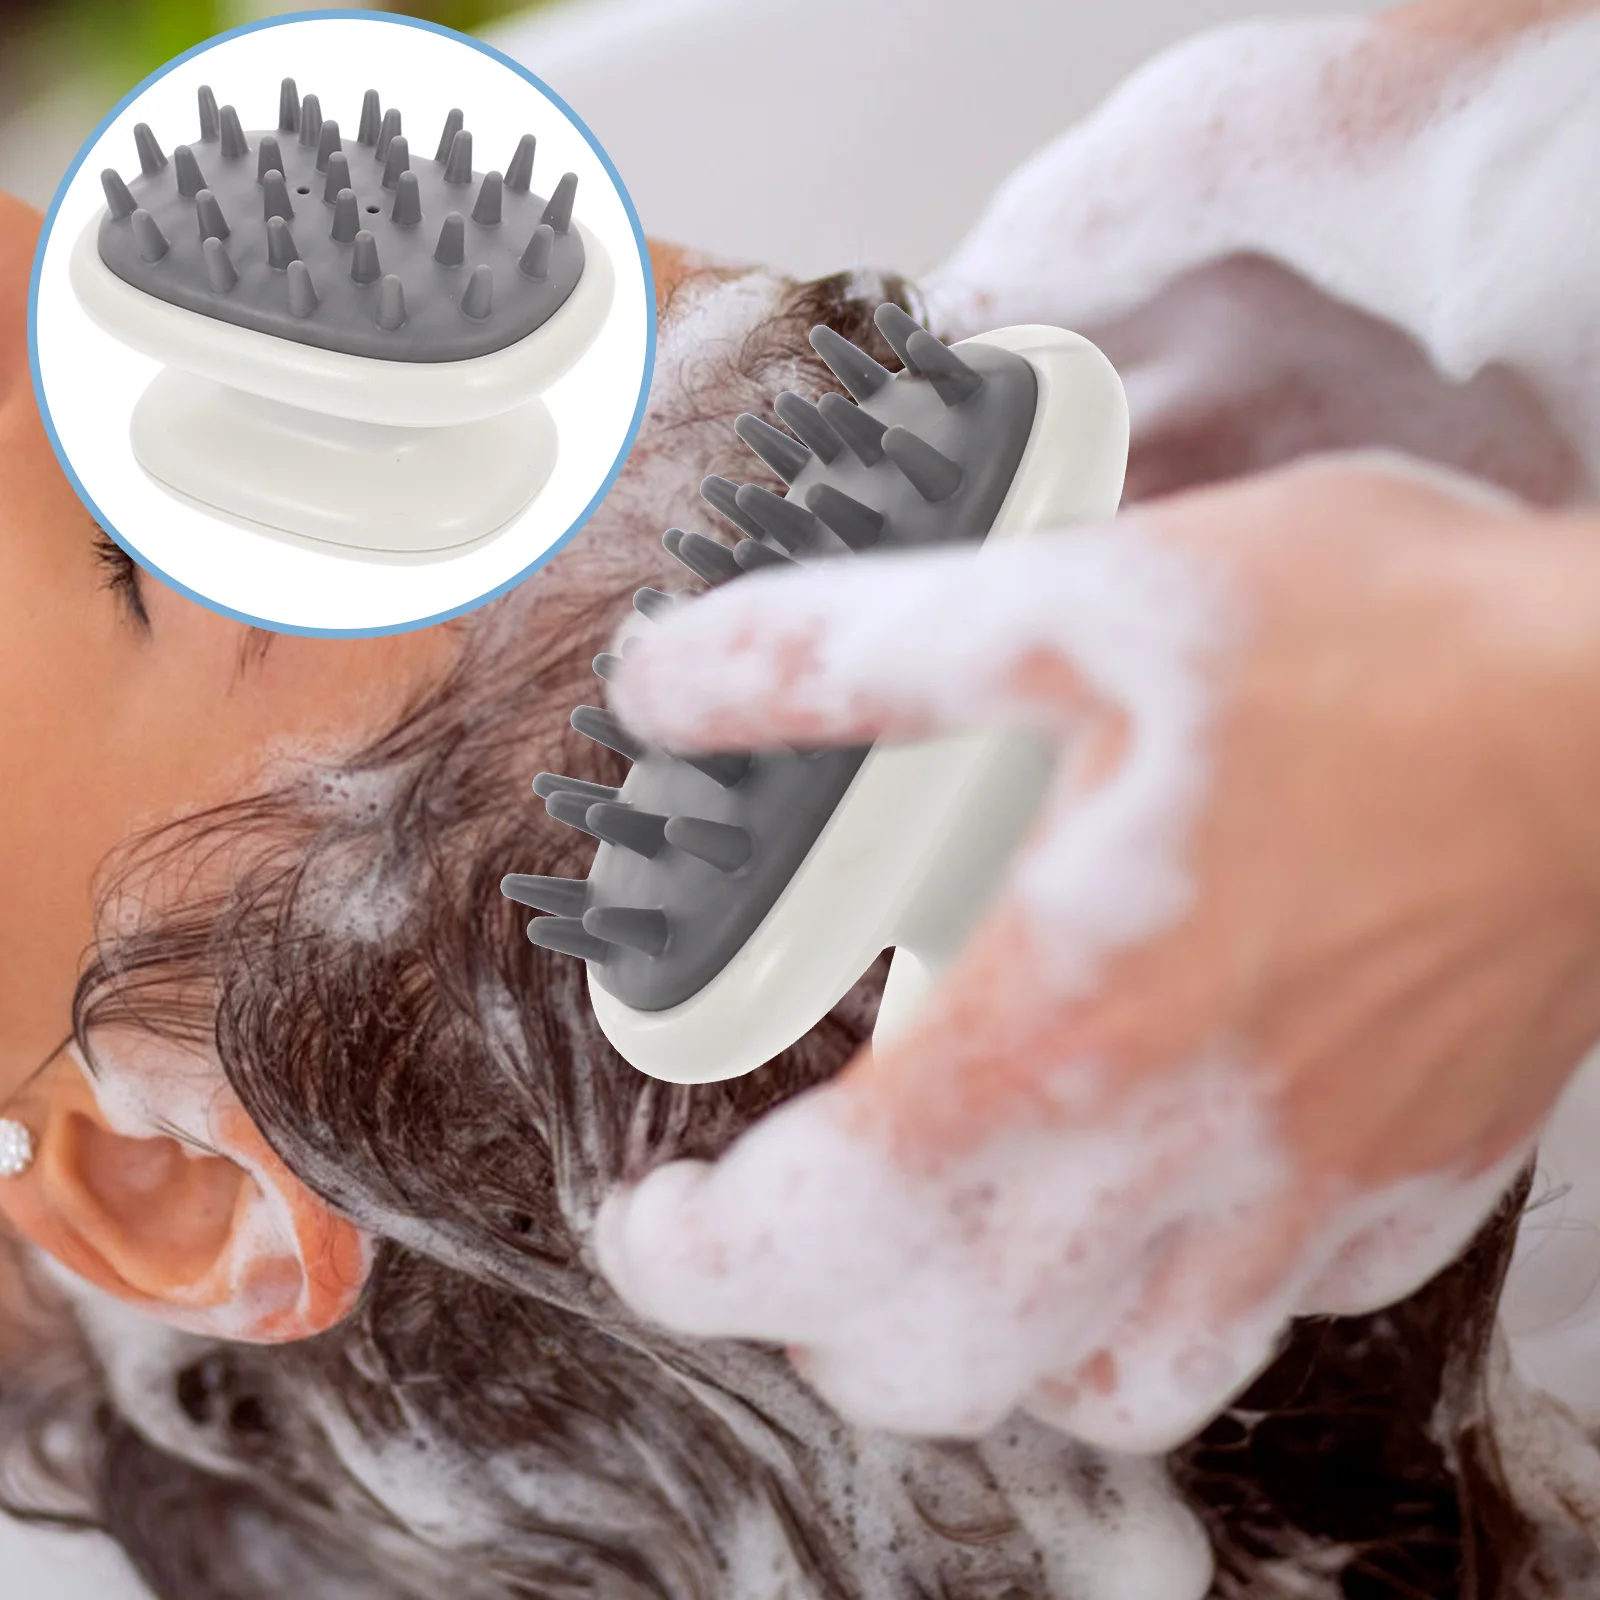 

Brush Hair Scalp Shampoo Scrubber Head Silicone Shower Dandruff Rubber Exfoliating Brushes Body Exfoliator Cleansing Washing